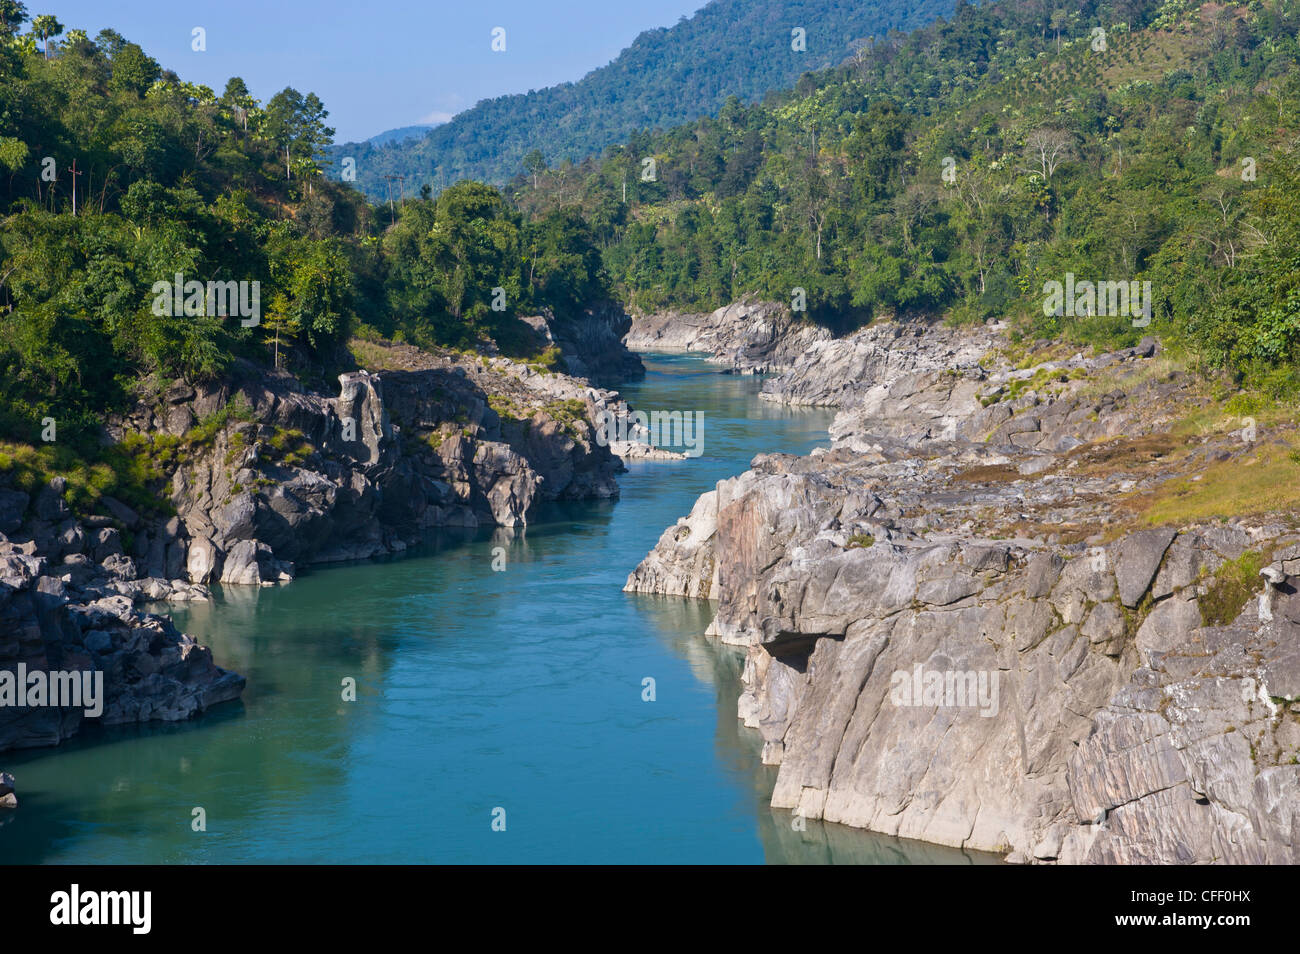 The beautiful Siang River in Arunachal Pradesh near Along, Northeast India, India, Asia Stock Photo